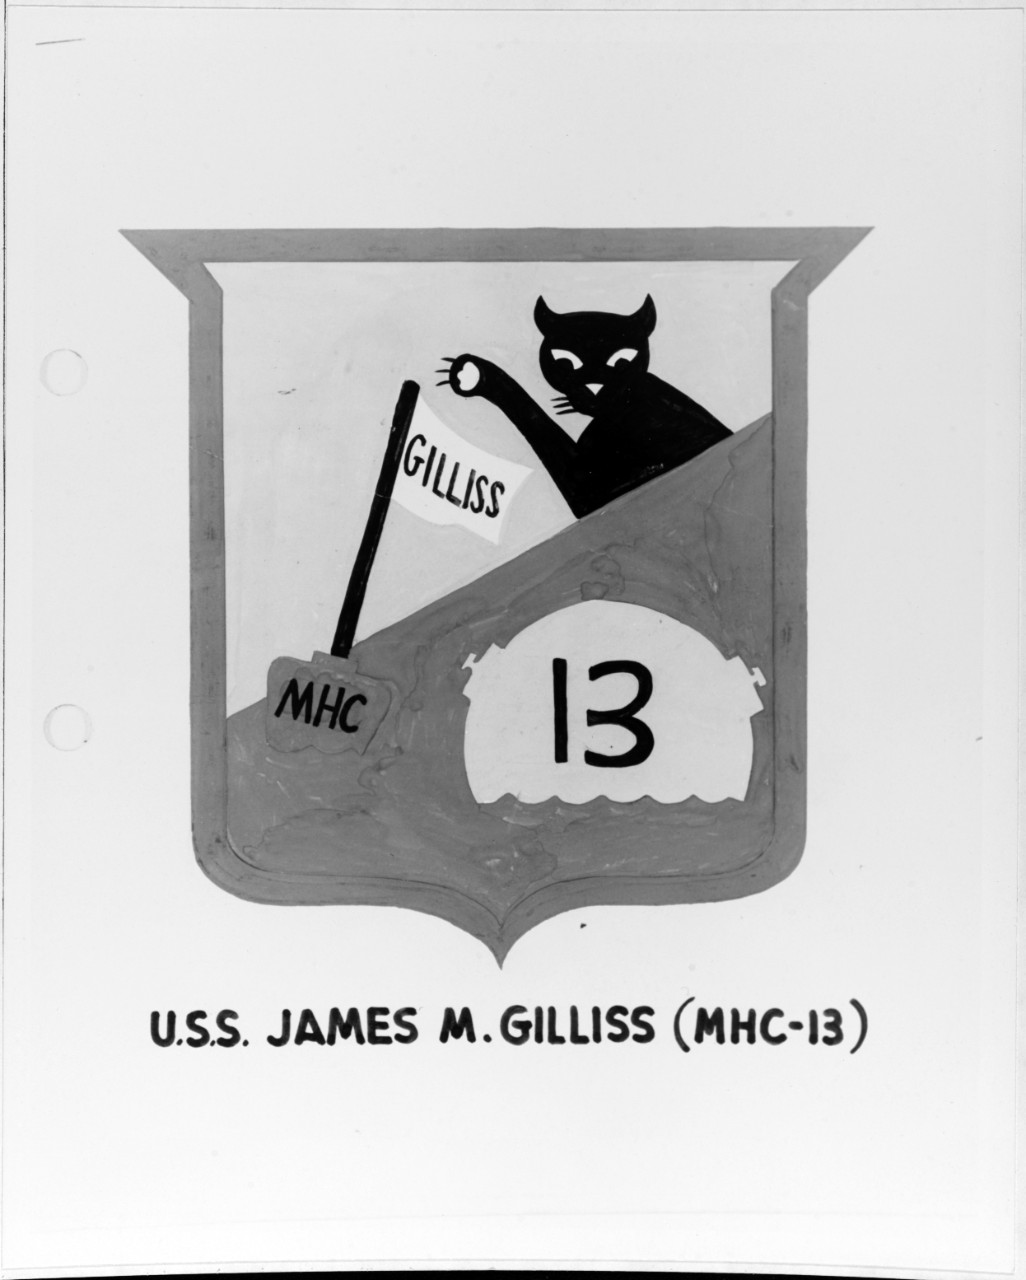 Insignia: USS JAMES M. GILLISS (MHC-13)